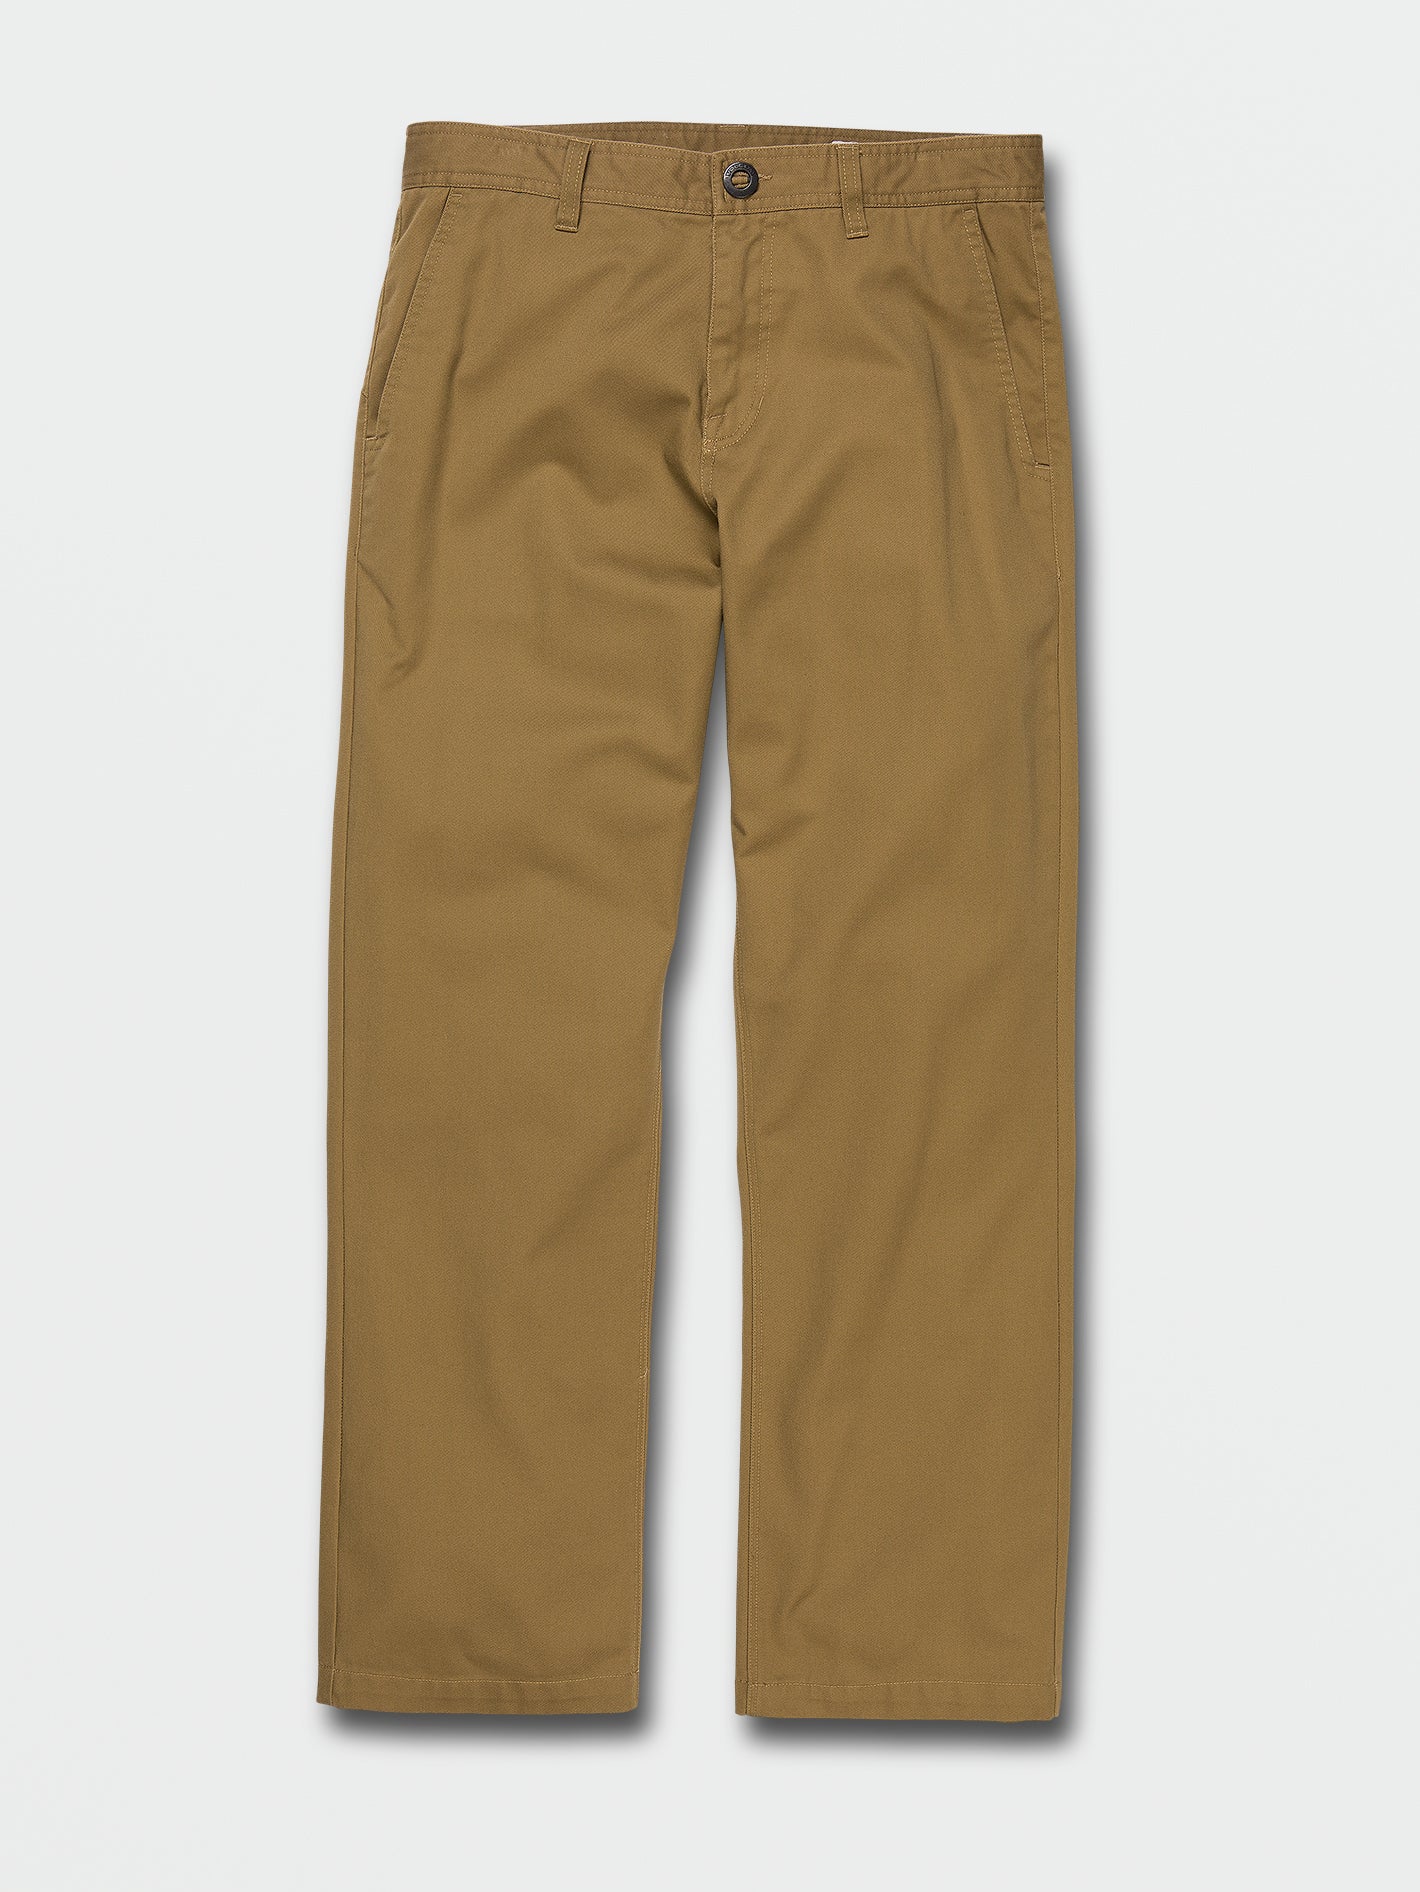 Dark Khaki Chino Pants : Made To Measure Custom Jeans For Men & Women,  MakeYourOwnJeans®